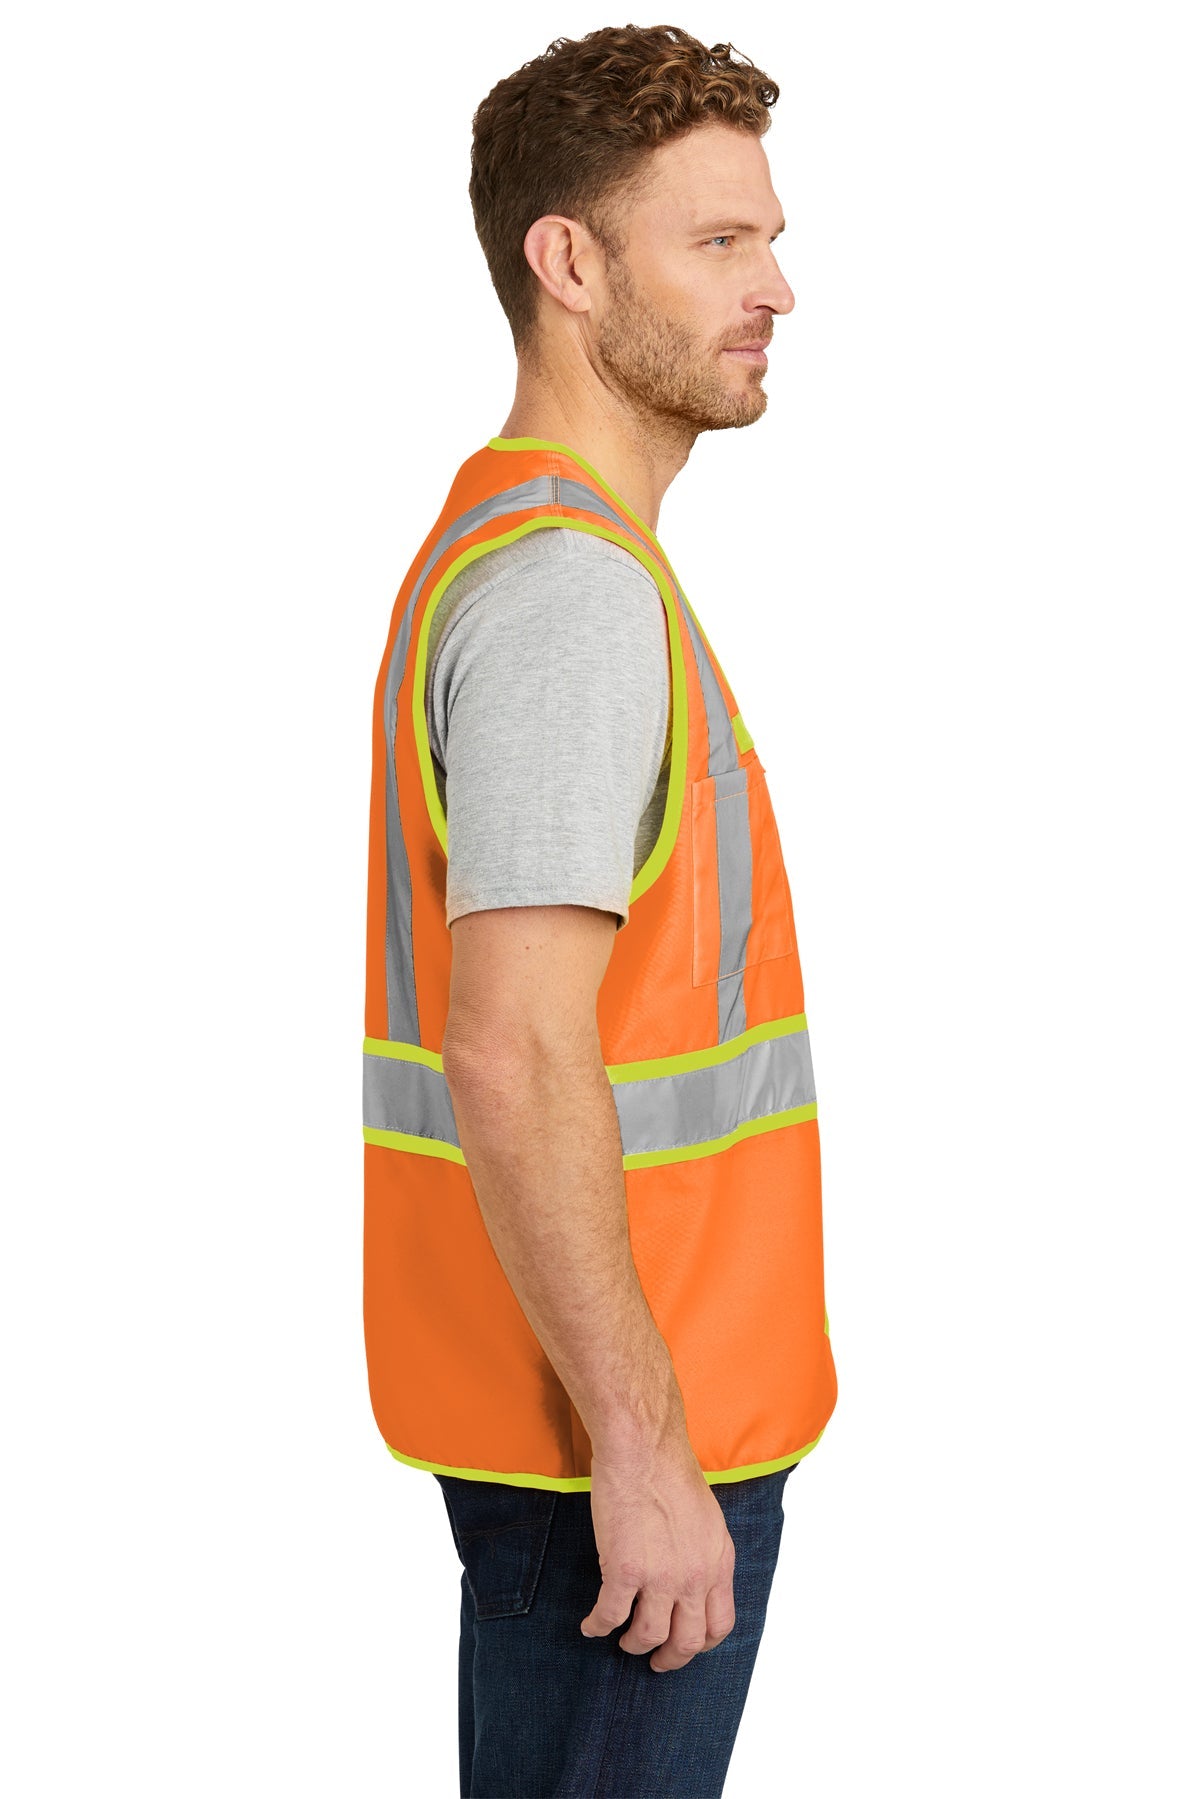 cornerstone_csv407 _safety orange/safety yellow_company_logo_jackets